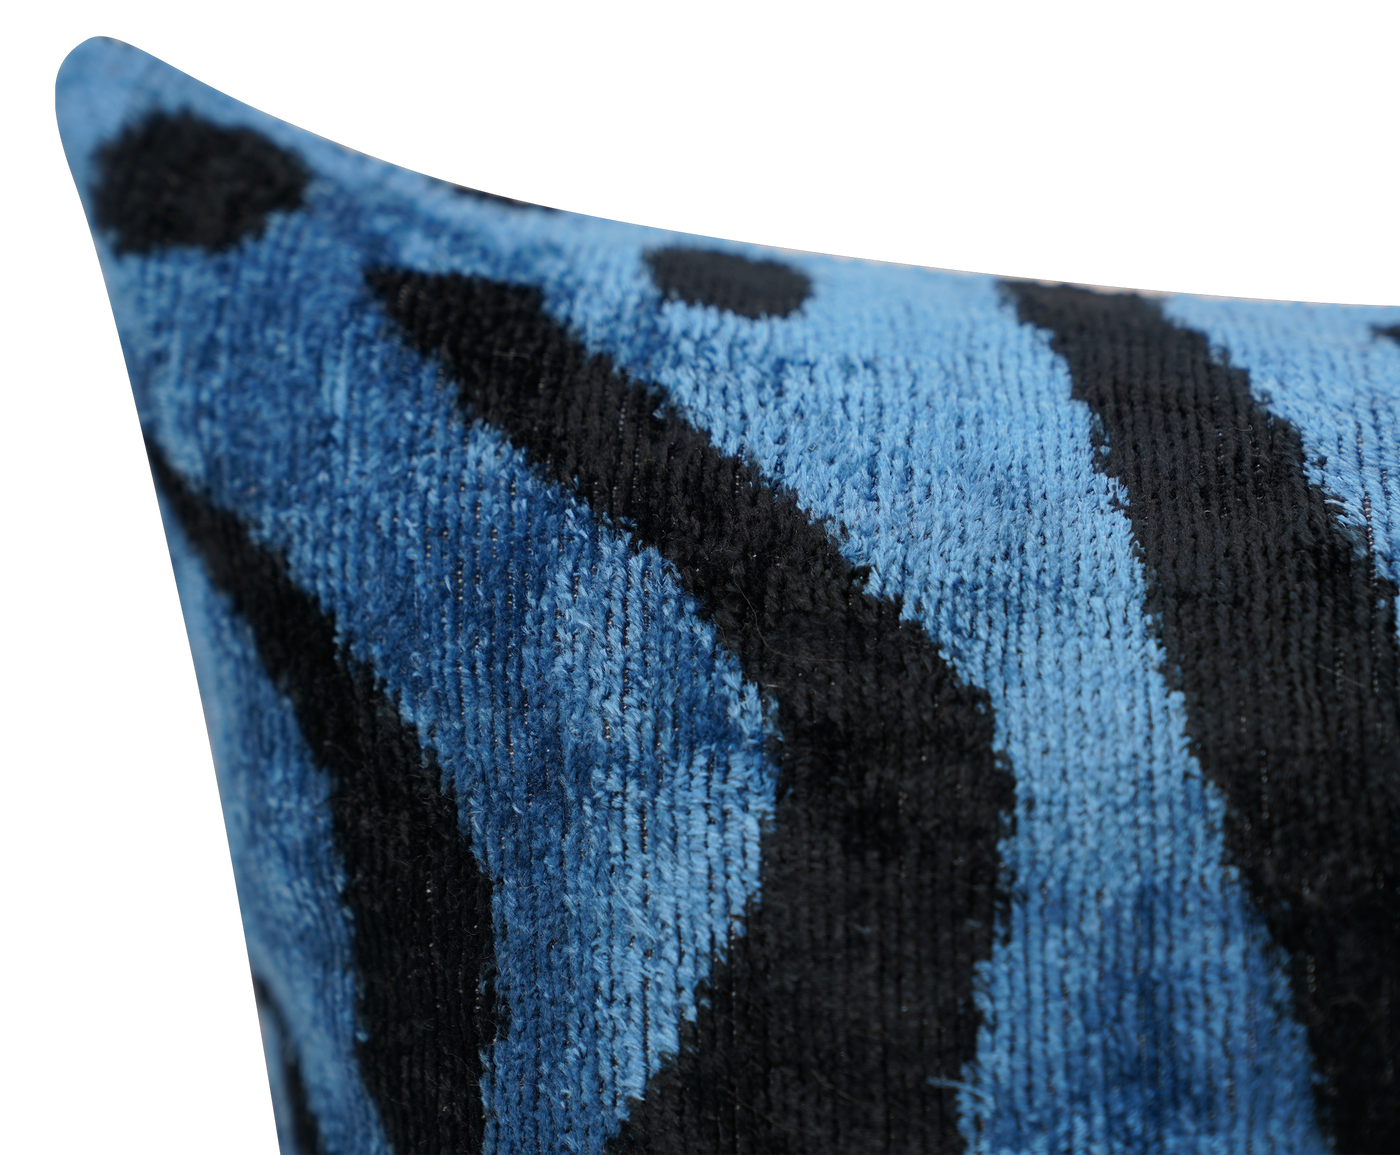 Navy Blue Tiger Print Pillows | Blue Tiger Print Pillows | Canvello